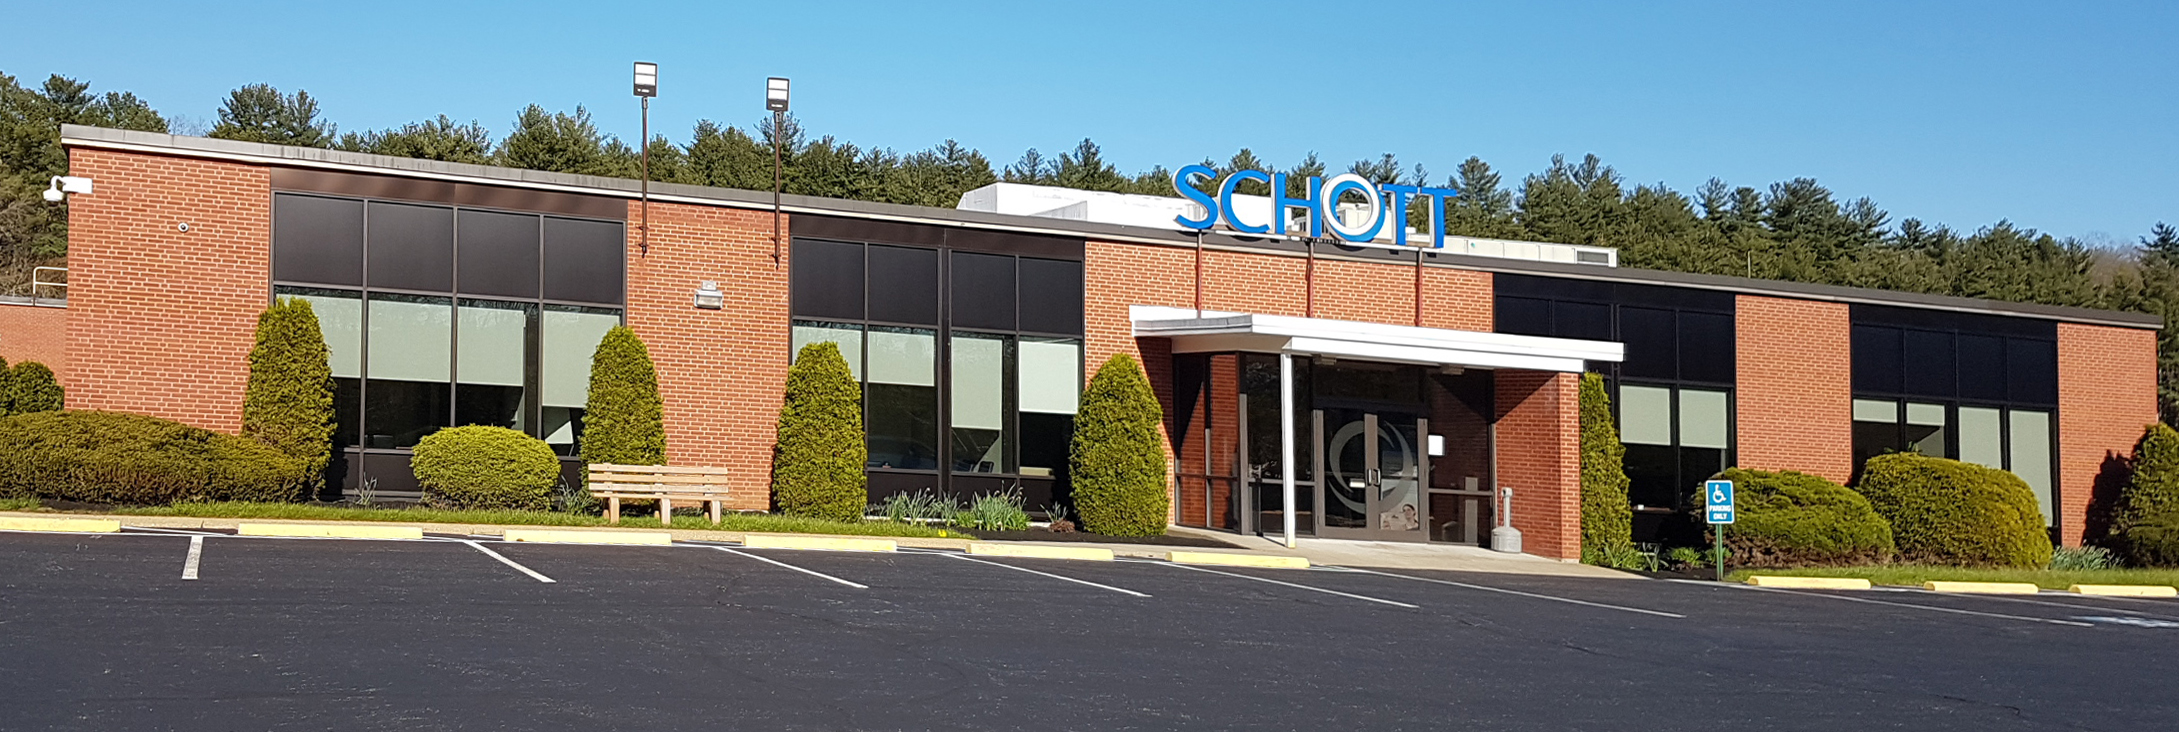 Main building of the SCHOTT plant in Southbridge, Massachusetts, USA